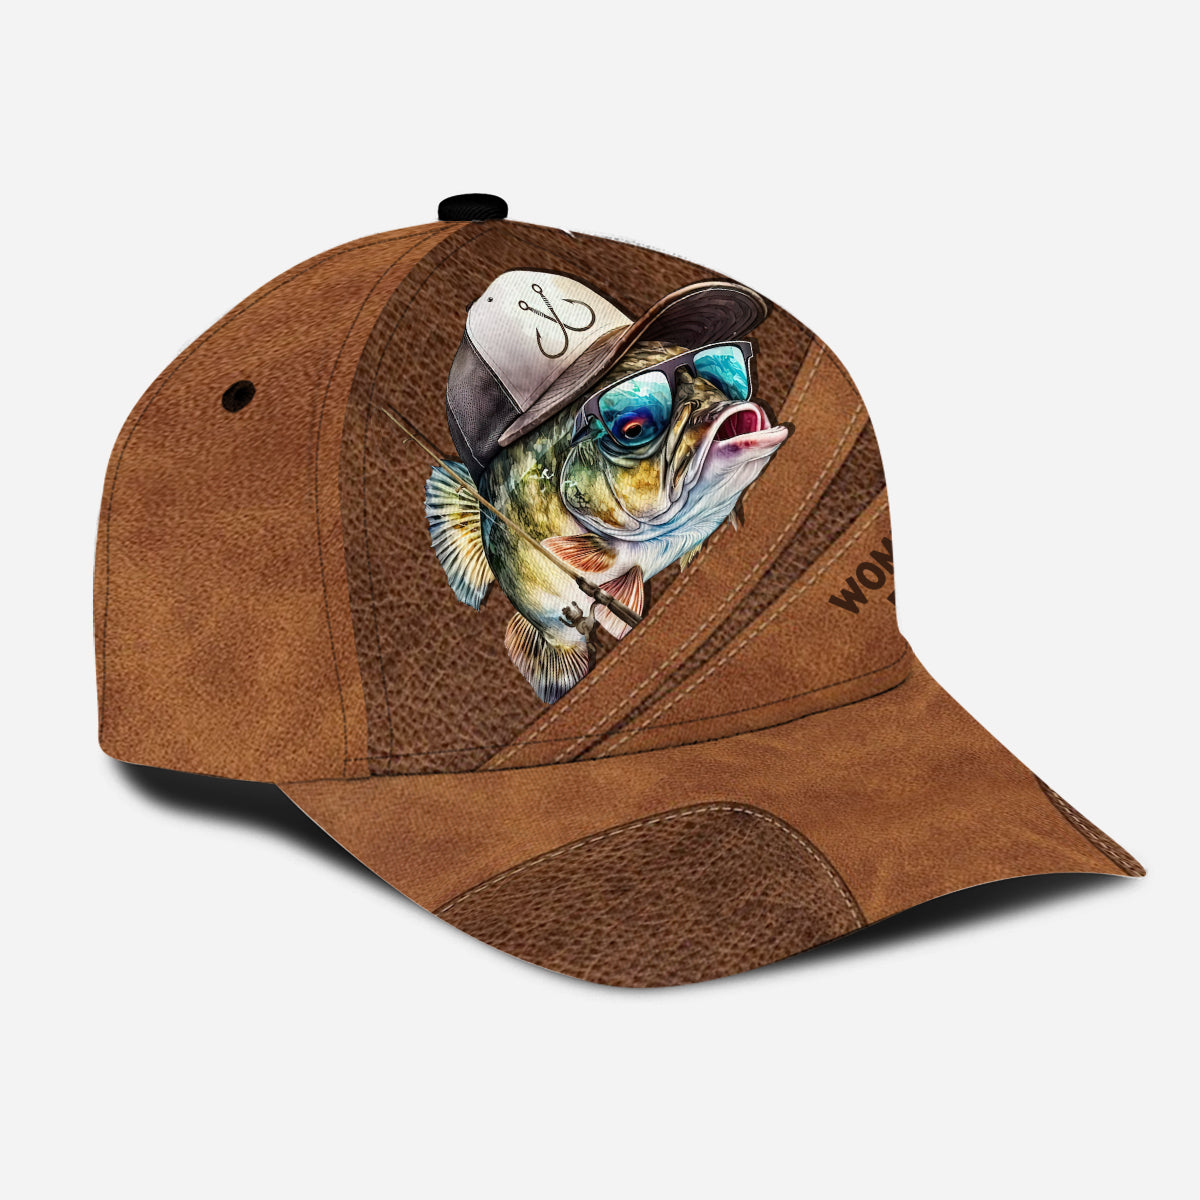 Fish on Hat CLASSIC Baseball Cap Fishing Hat Fisherman Gift Custom